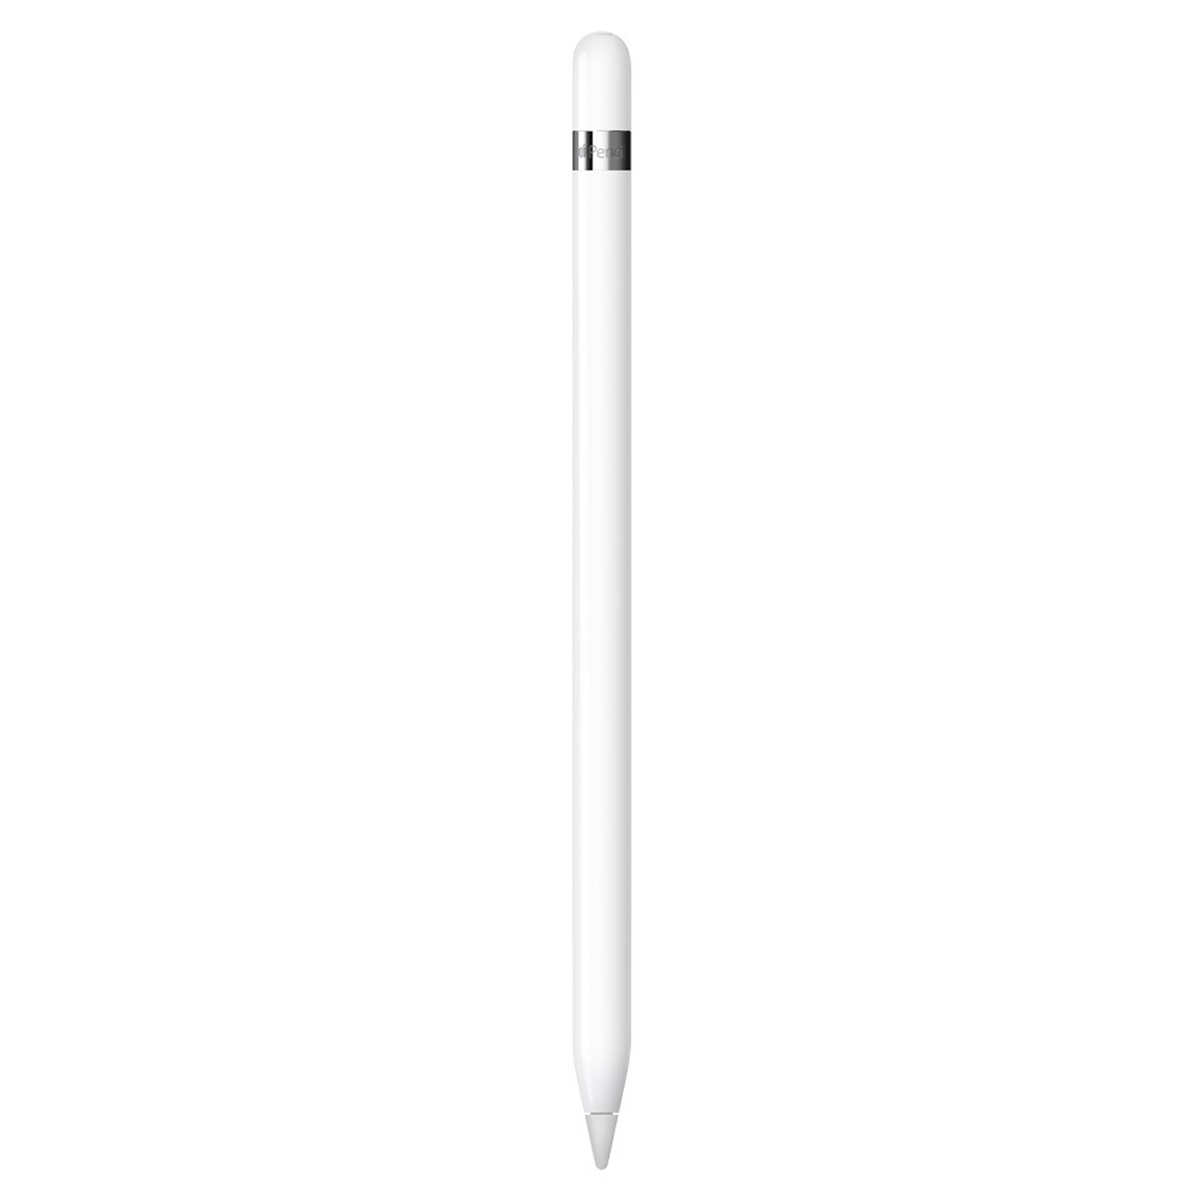 Apple Pencil For IPad Pro